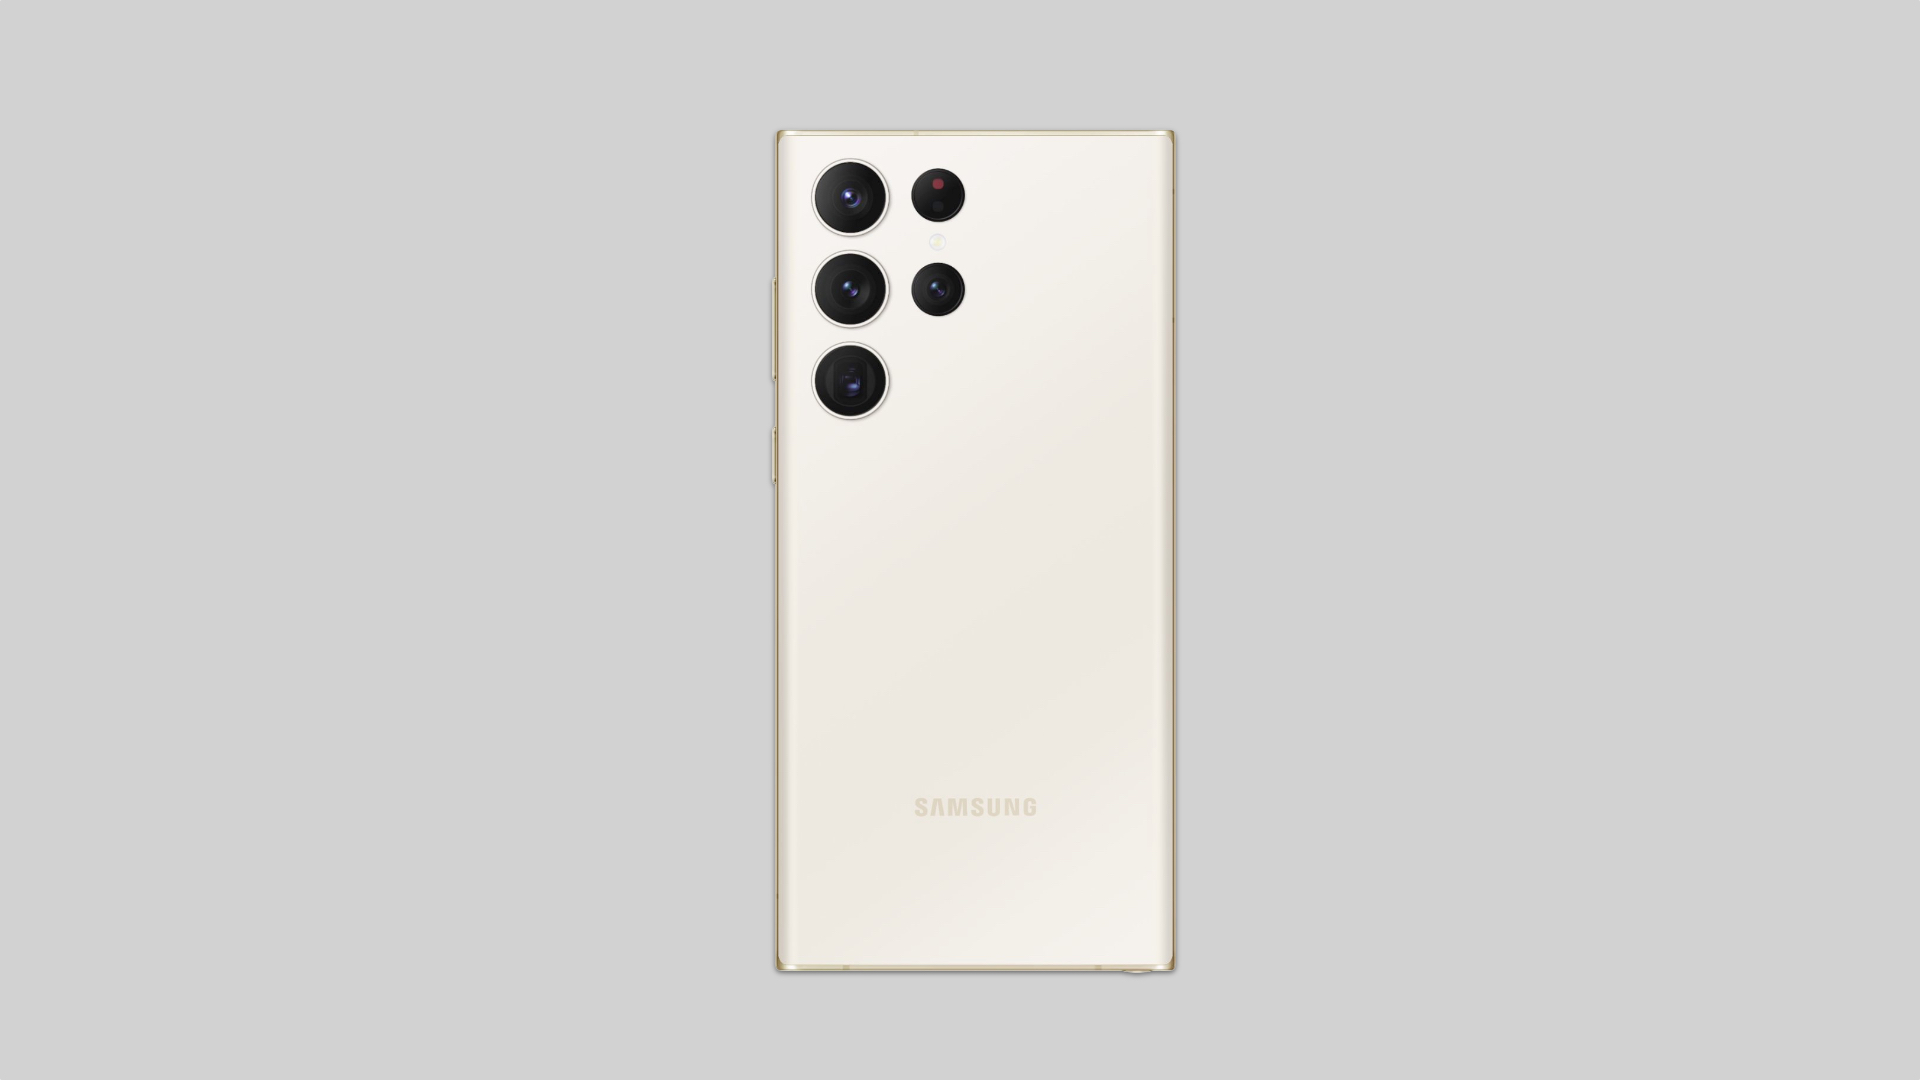 Samsung S23 Ultra Price in USA